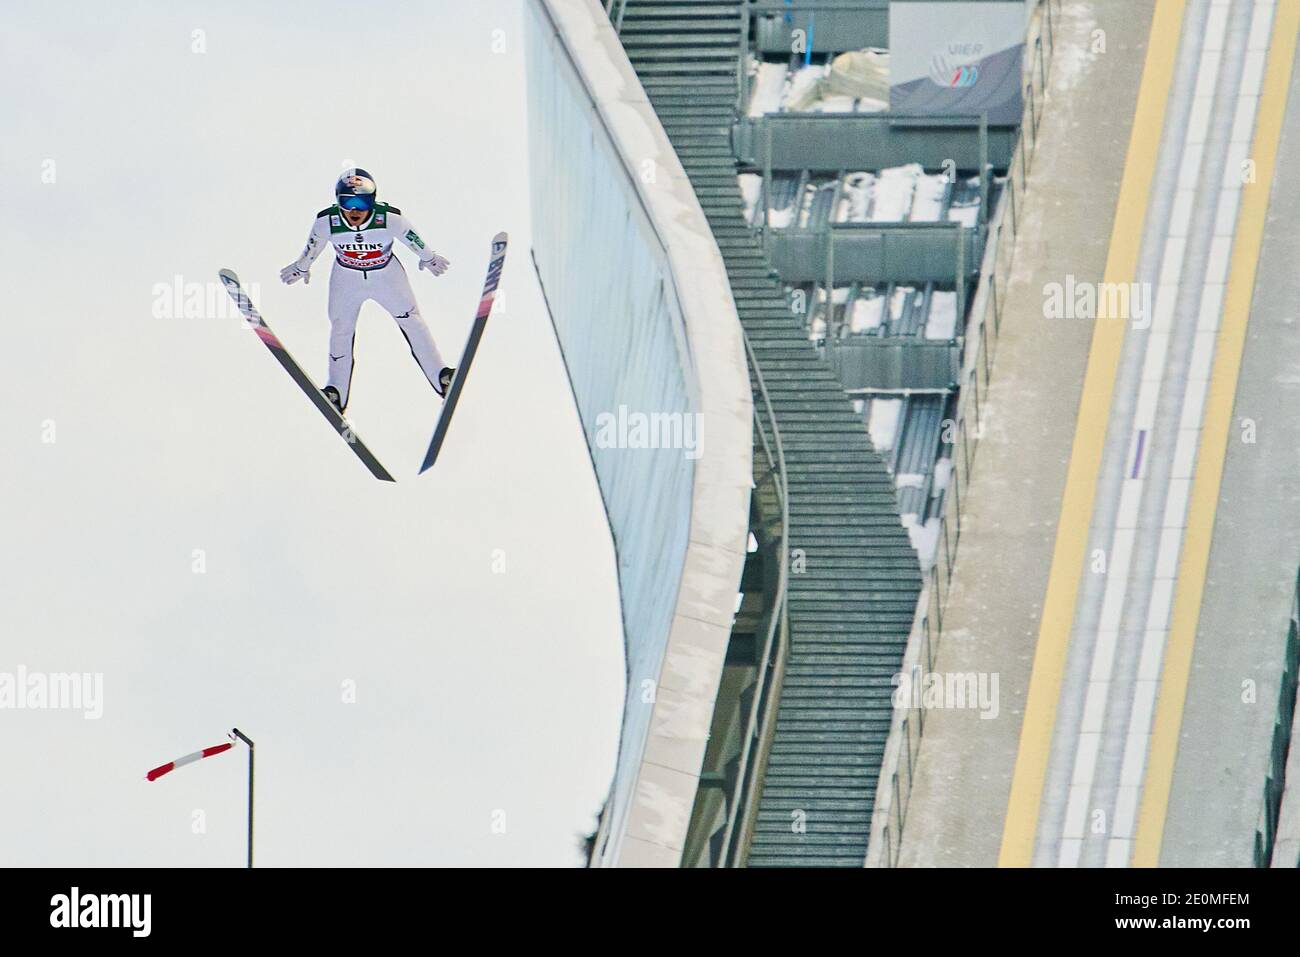 Ryoyu KOBAYASHI, JPN  in action at the Four Hills Tournament Ski Jumping at Olympic Stadium, Grosse Olympiaschanze in Garmisch-Partenkirchen, Bavaria, Germany, January 01, 2021.  © Peter Schatz / Alamy Live News Stock Photo